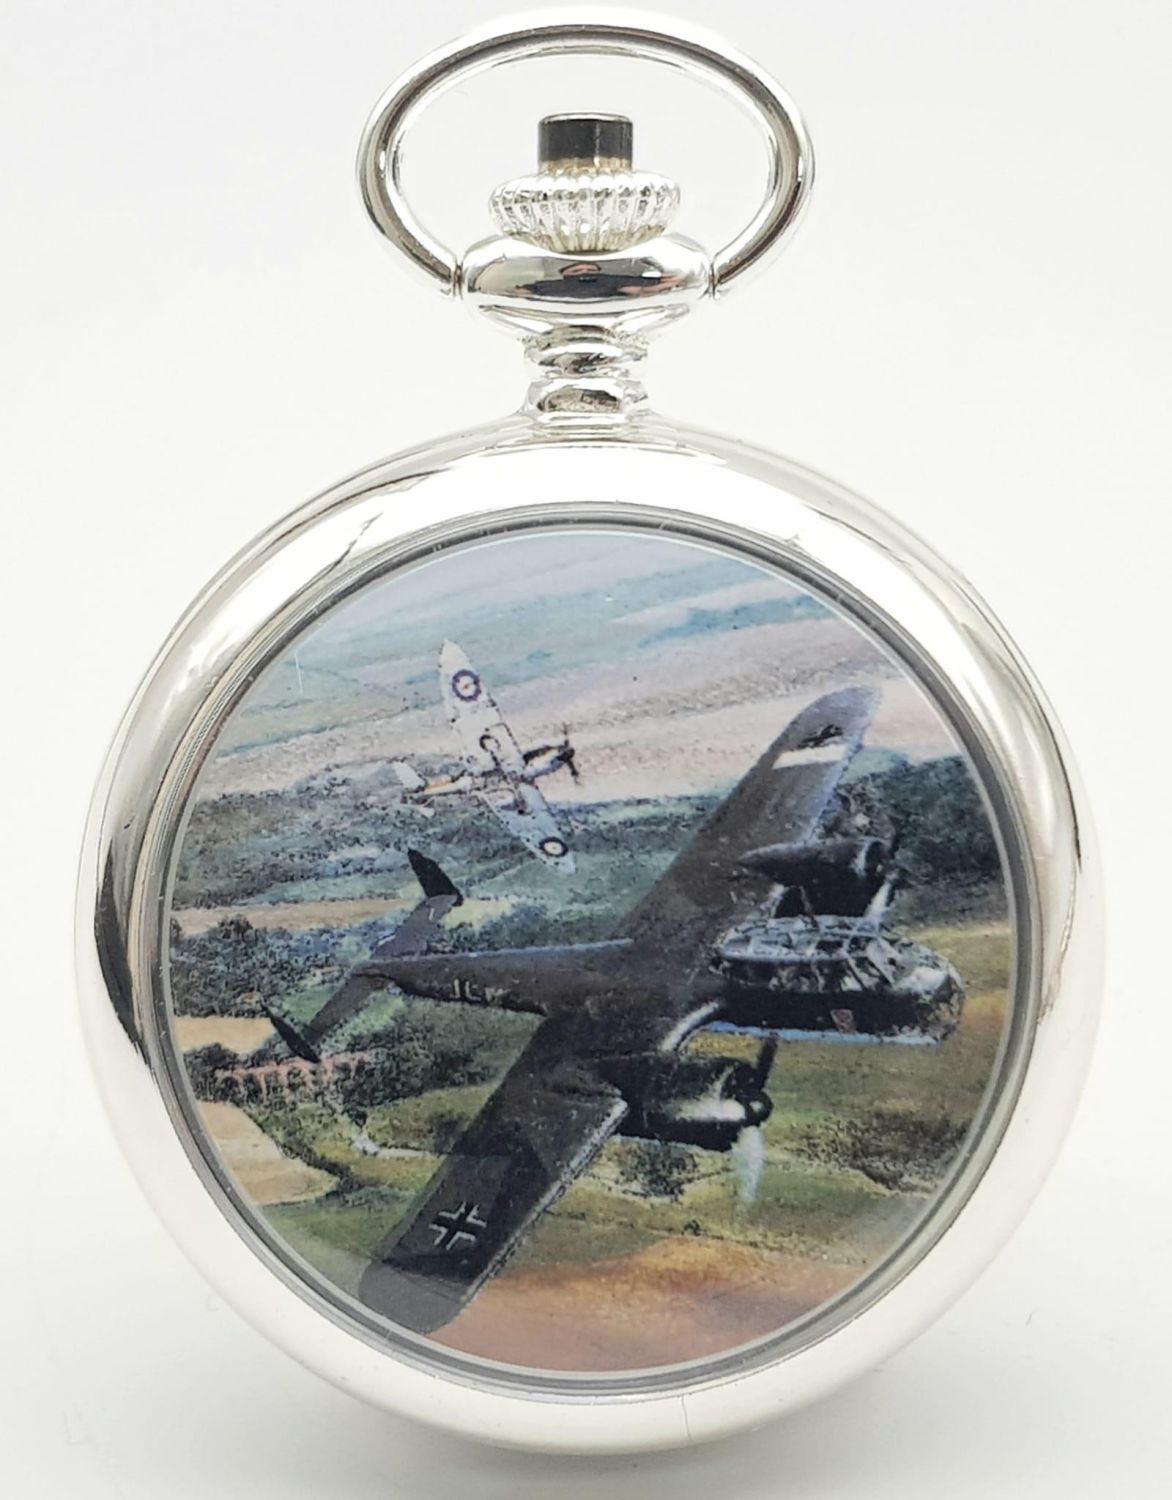 A Silver Tone, Manual Wind Pocket Watch Commemorating the WW2 German Pilot Feldwebel Heitsch in - Image 3 of 10